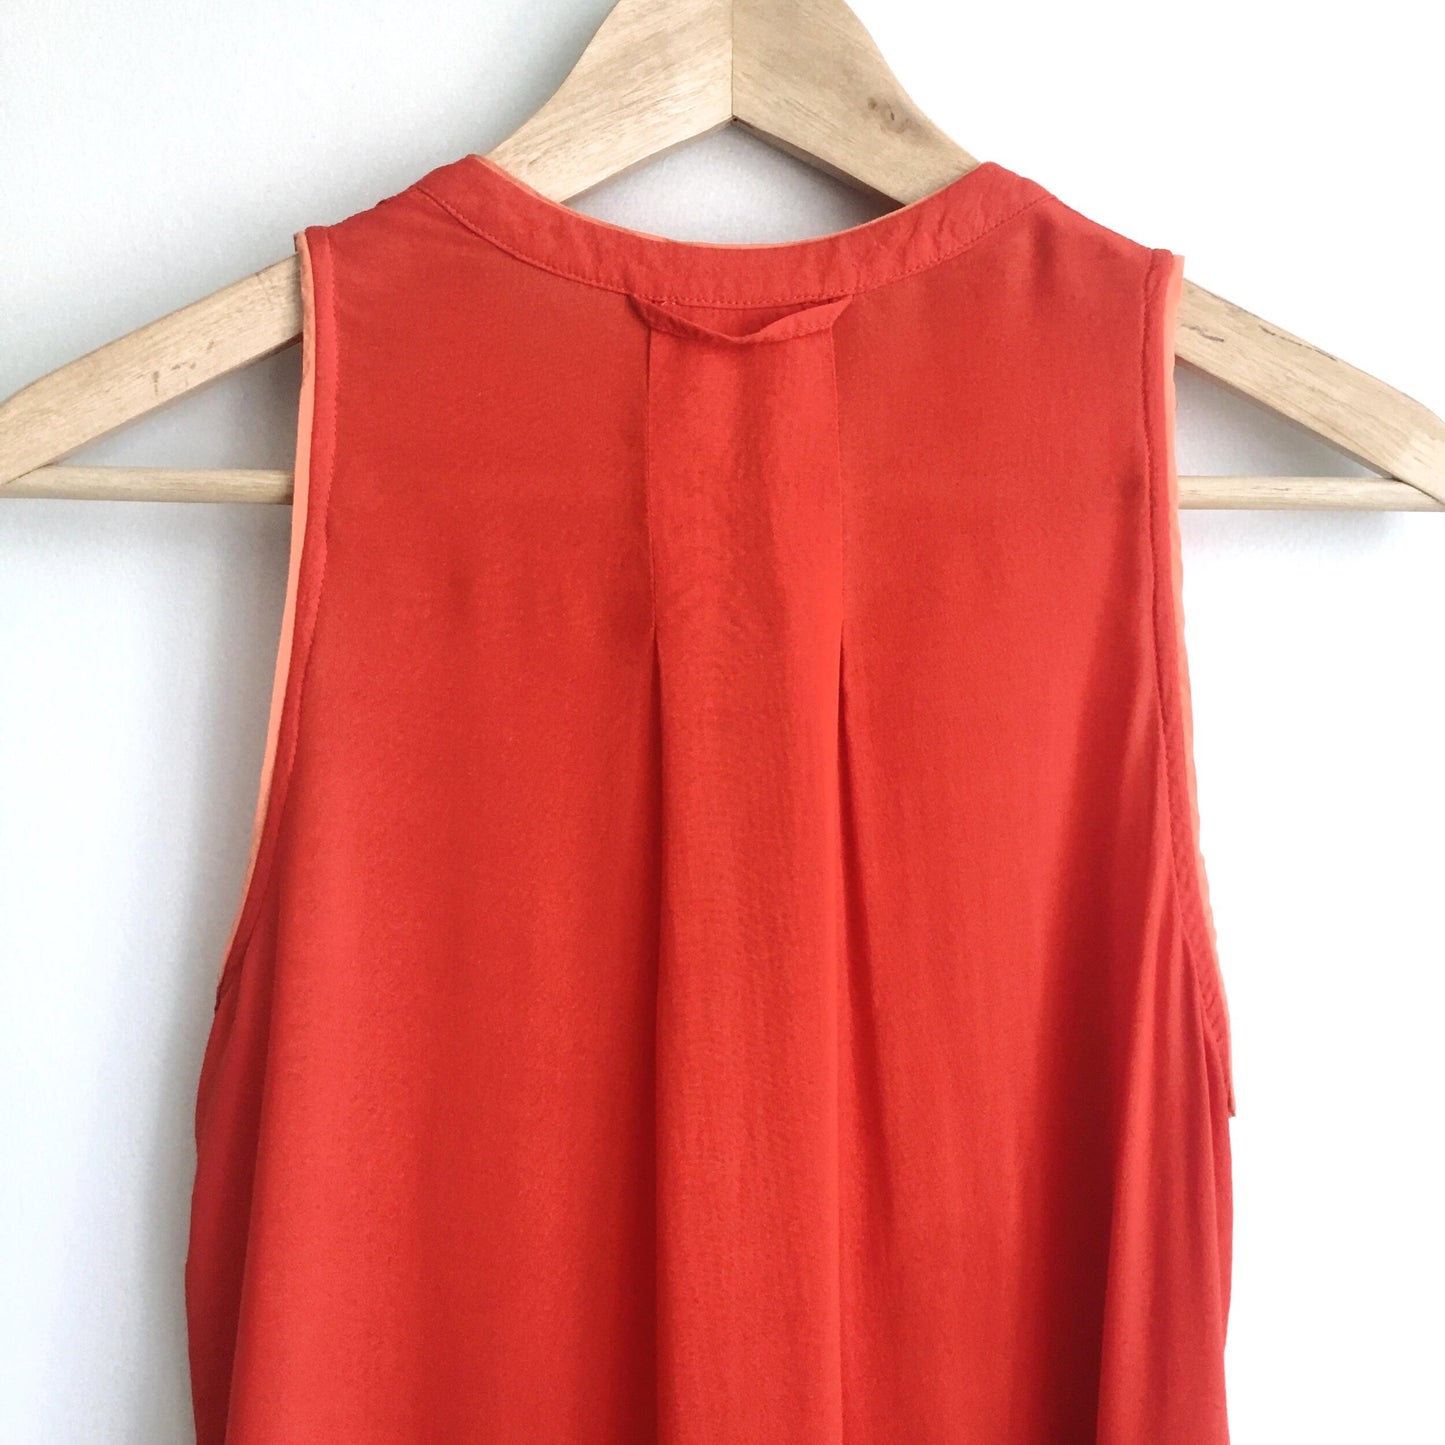 Maeve red-orange sleeveless buttondown - size 2